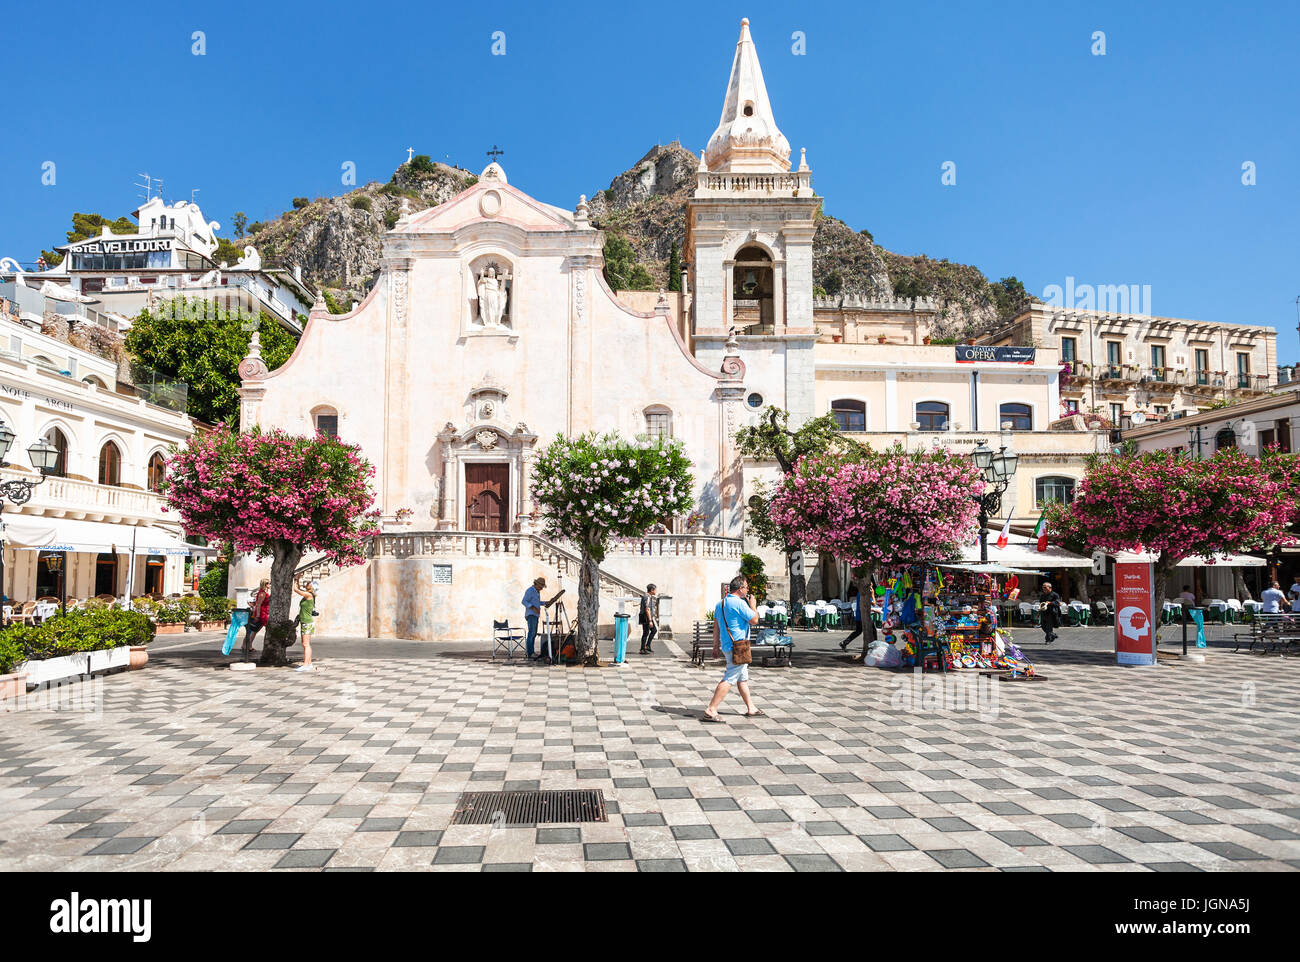 TAORMINA, ITALY - JUNE 29, 2017: tourists on square Piazza 9 Aprile near church Chiesa di San Giuseppe in Taormina city. Taormina is resort town on Io Stock Photo